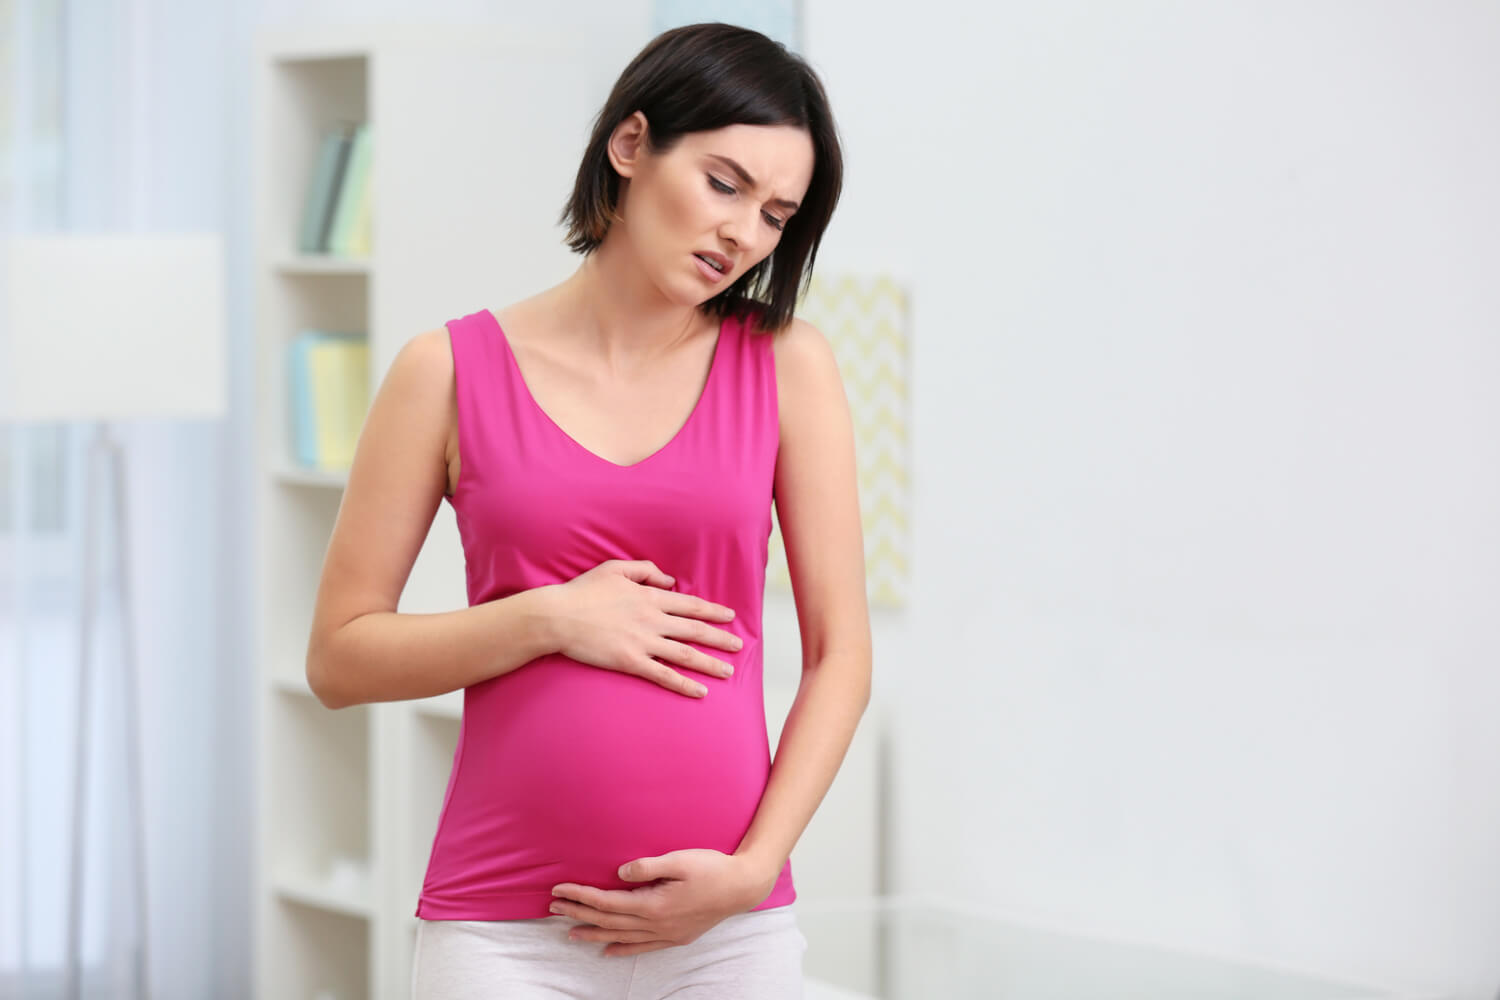 cramps during pregnancy